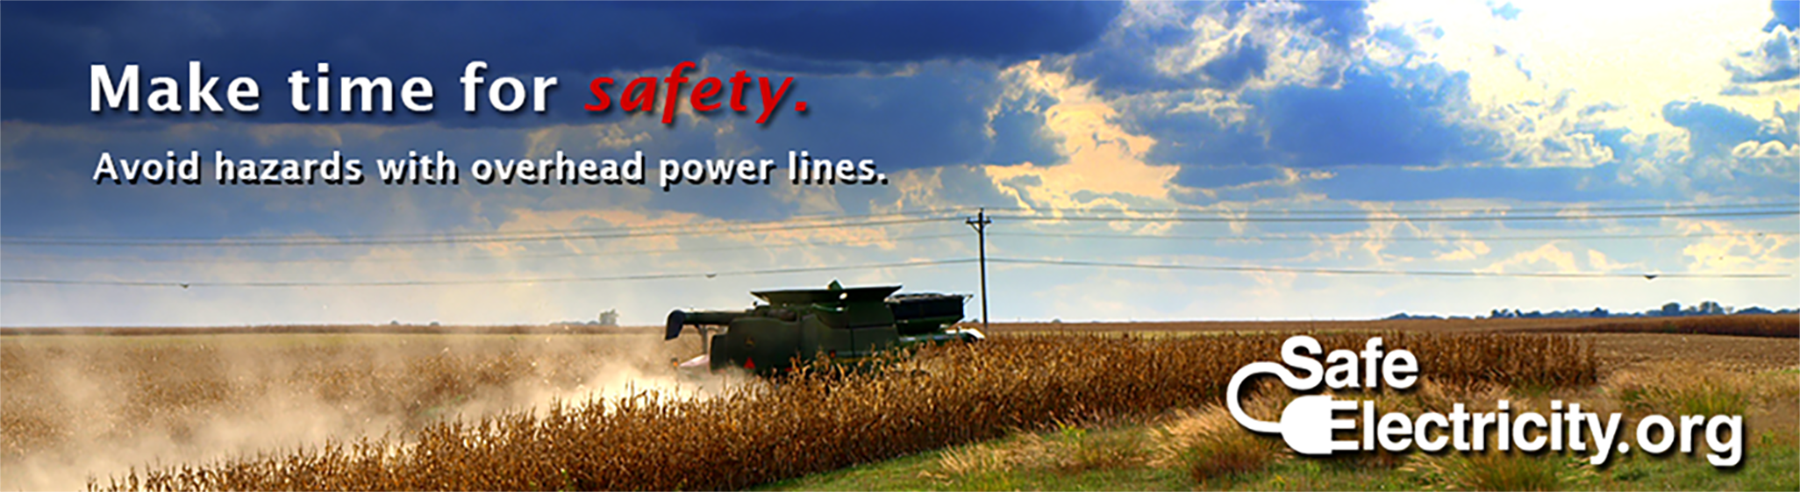 Avoid hazards with overhead power lines